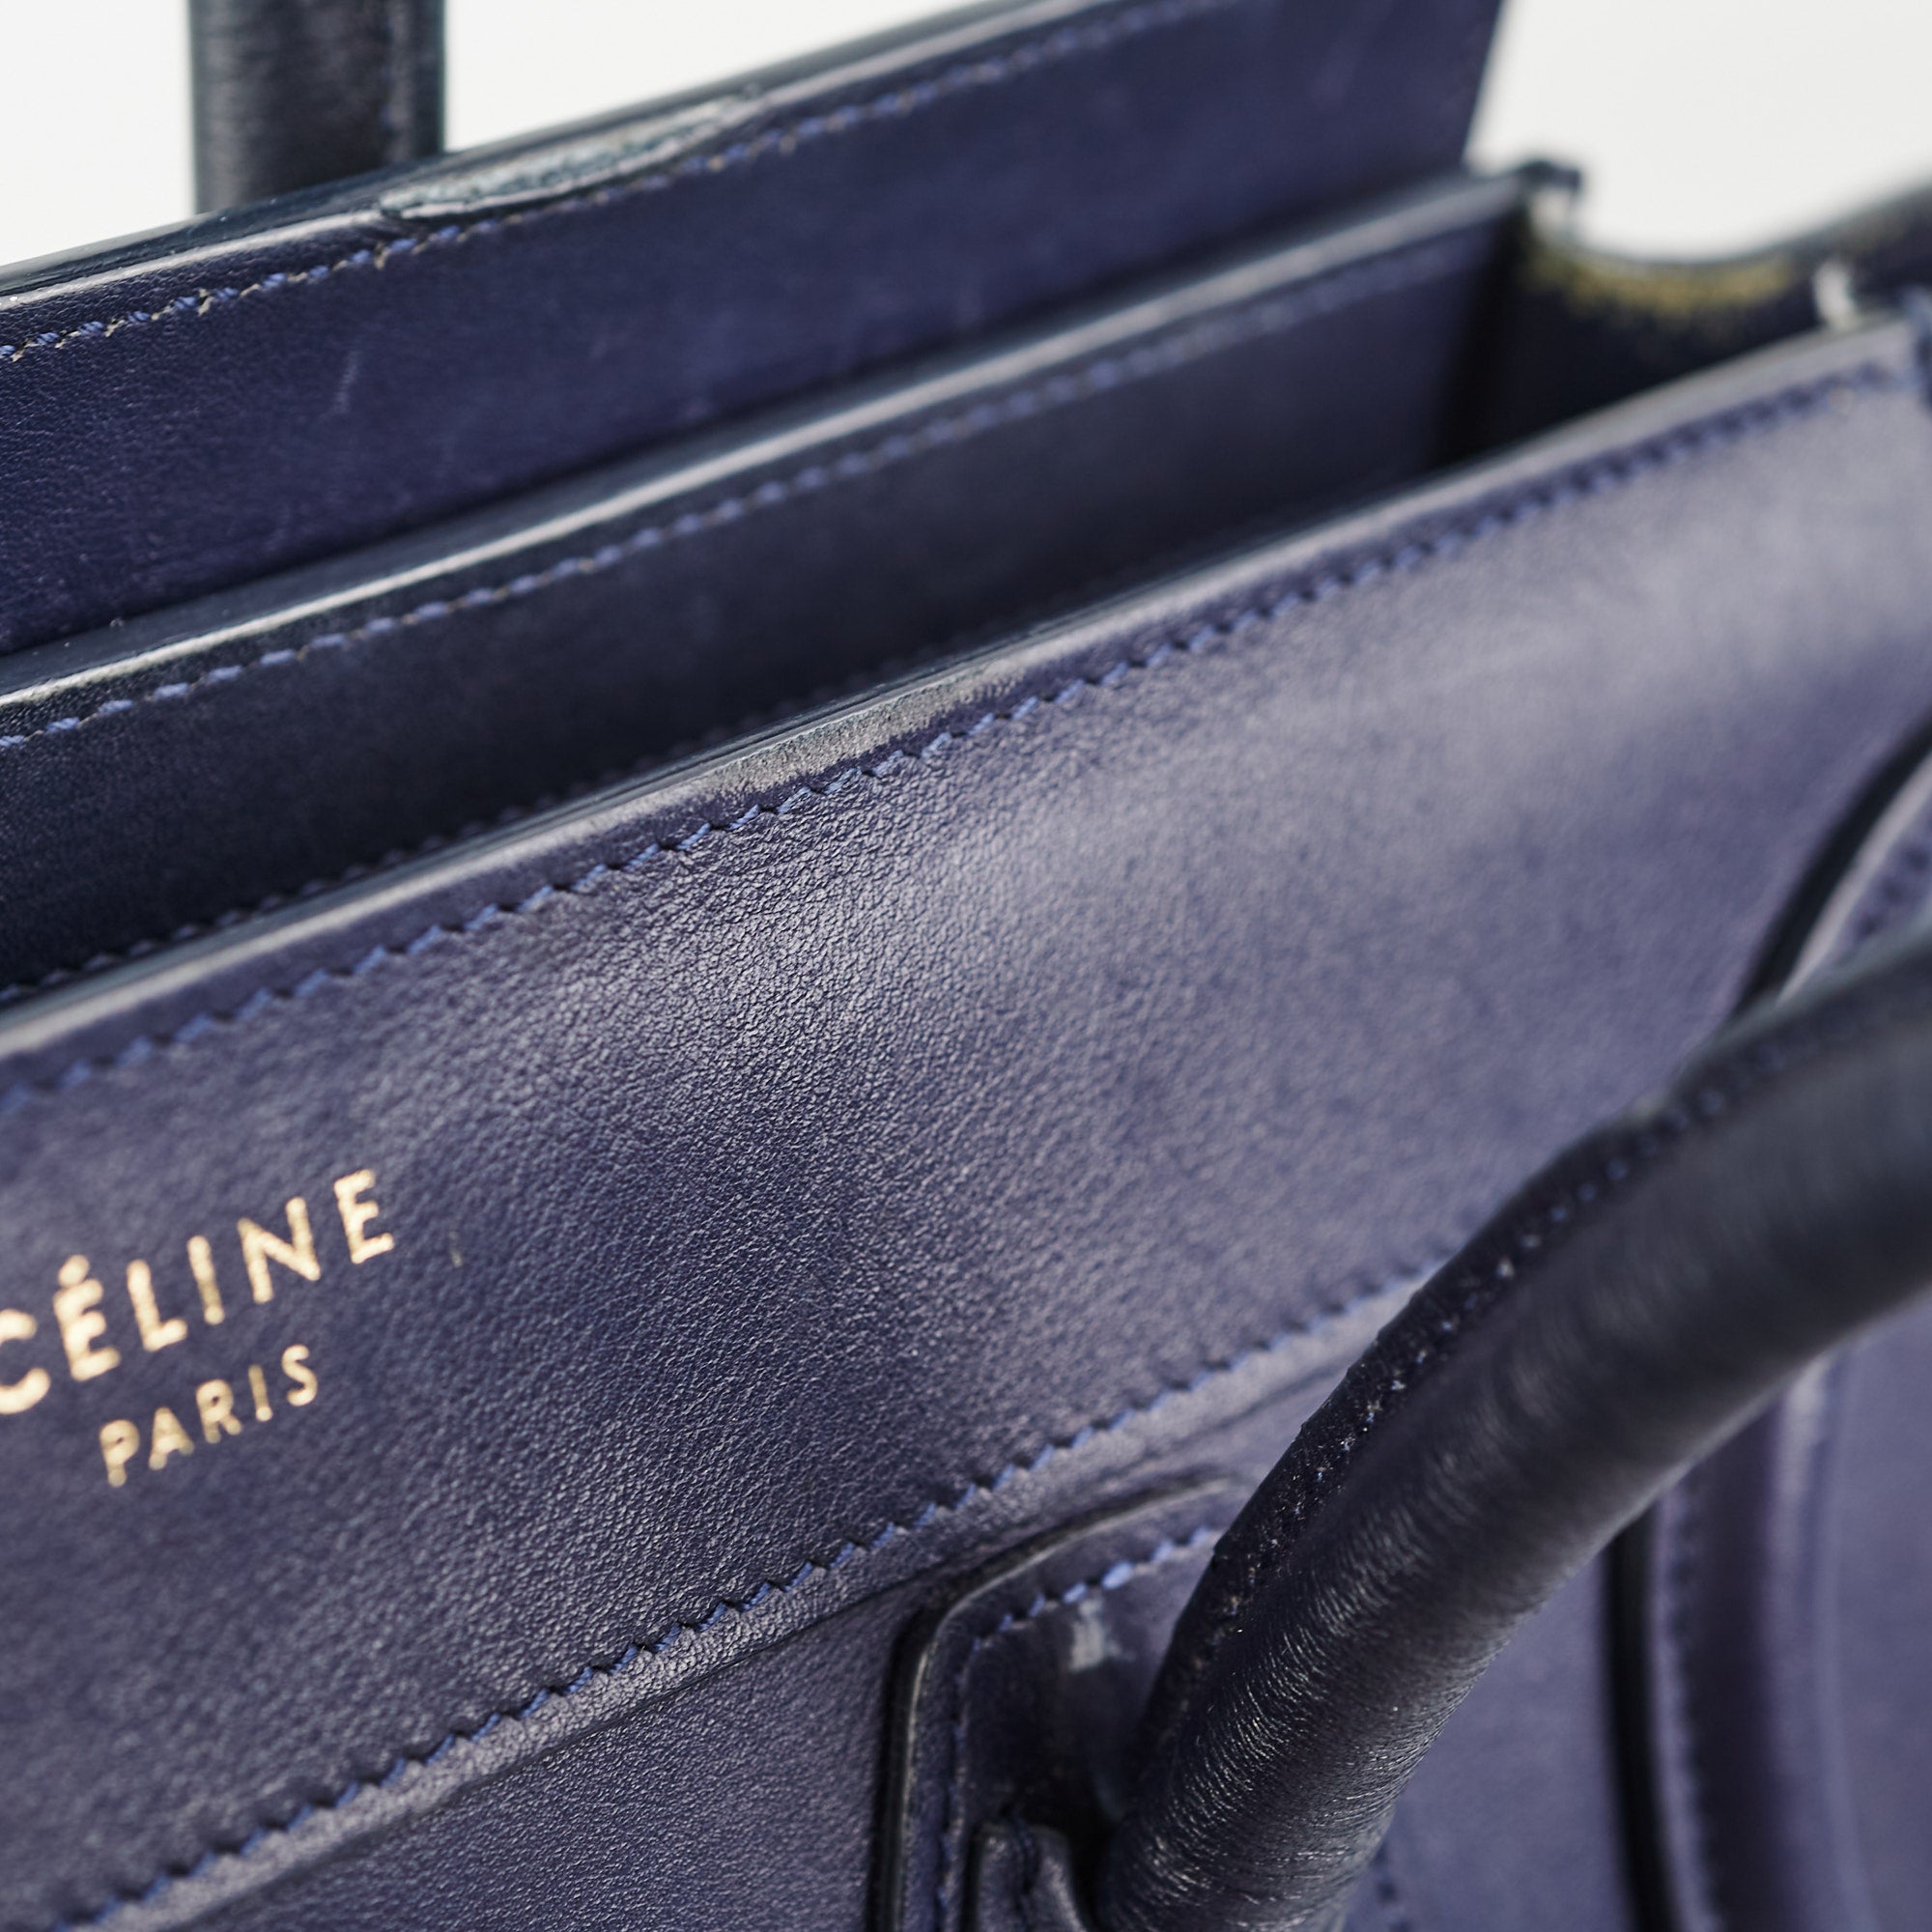 Celine Mini Belt Bag Blue/Navy - THE PURSE AFFAIR